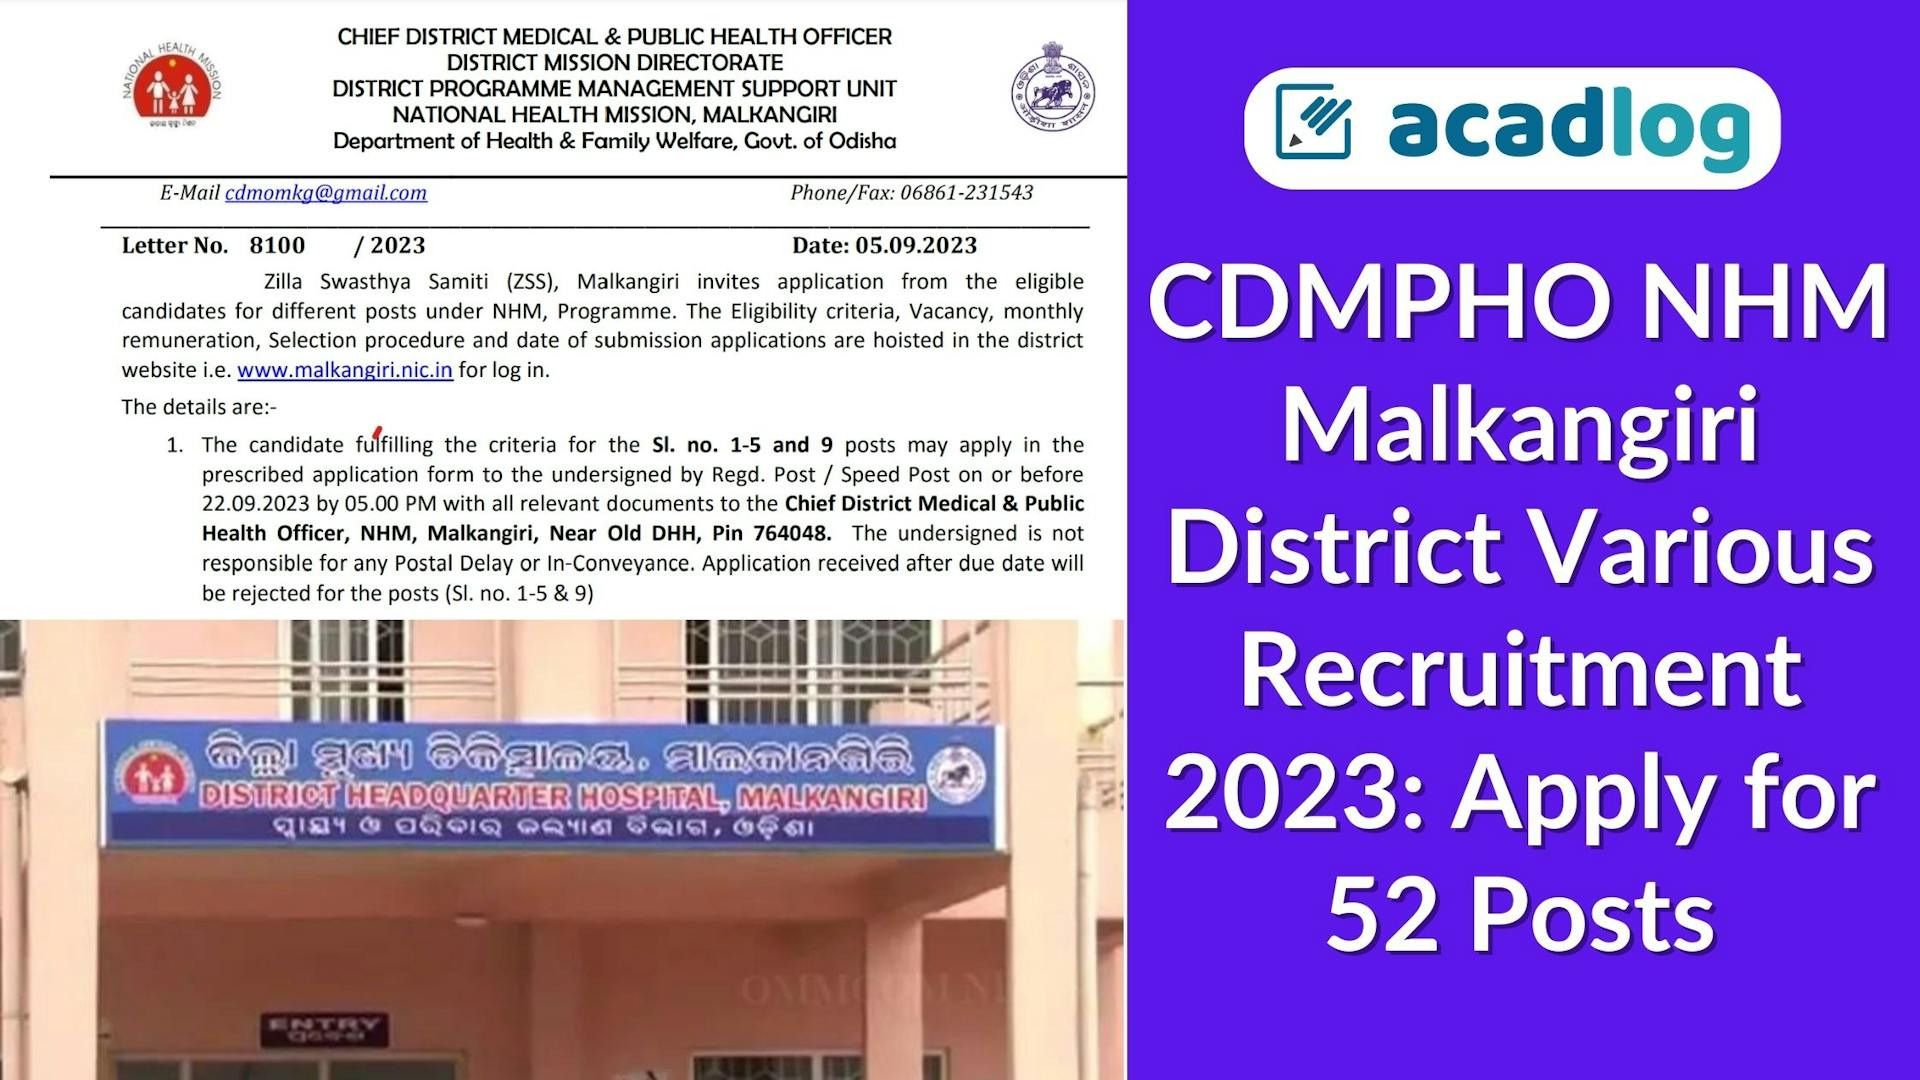 CDMPHO NHM Malkangiri District Various Recruitment 2023: Apply for 52 Posts